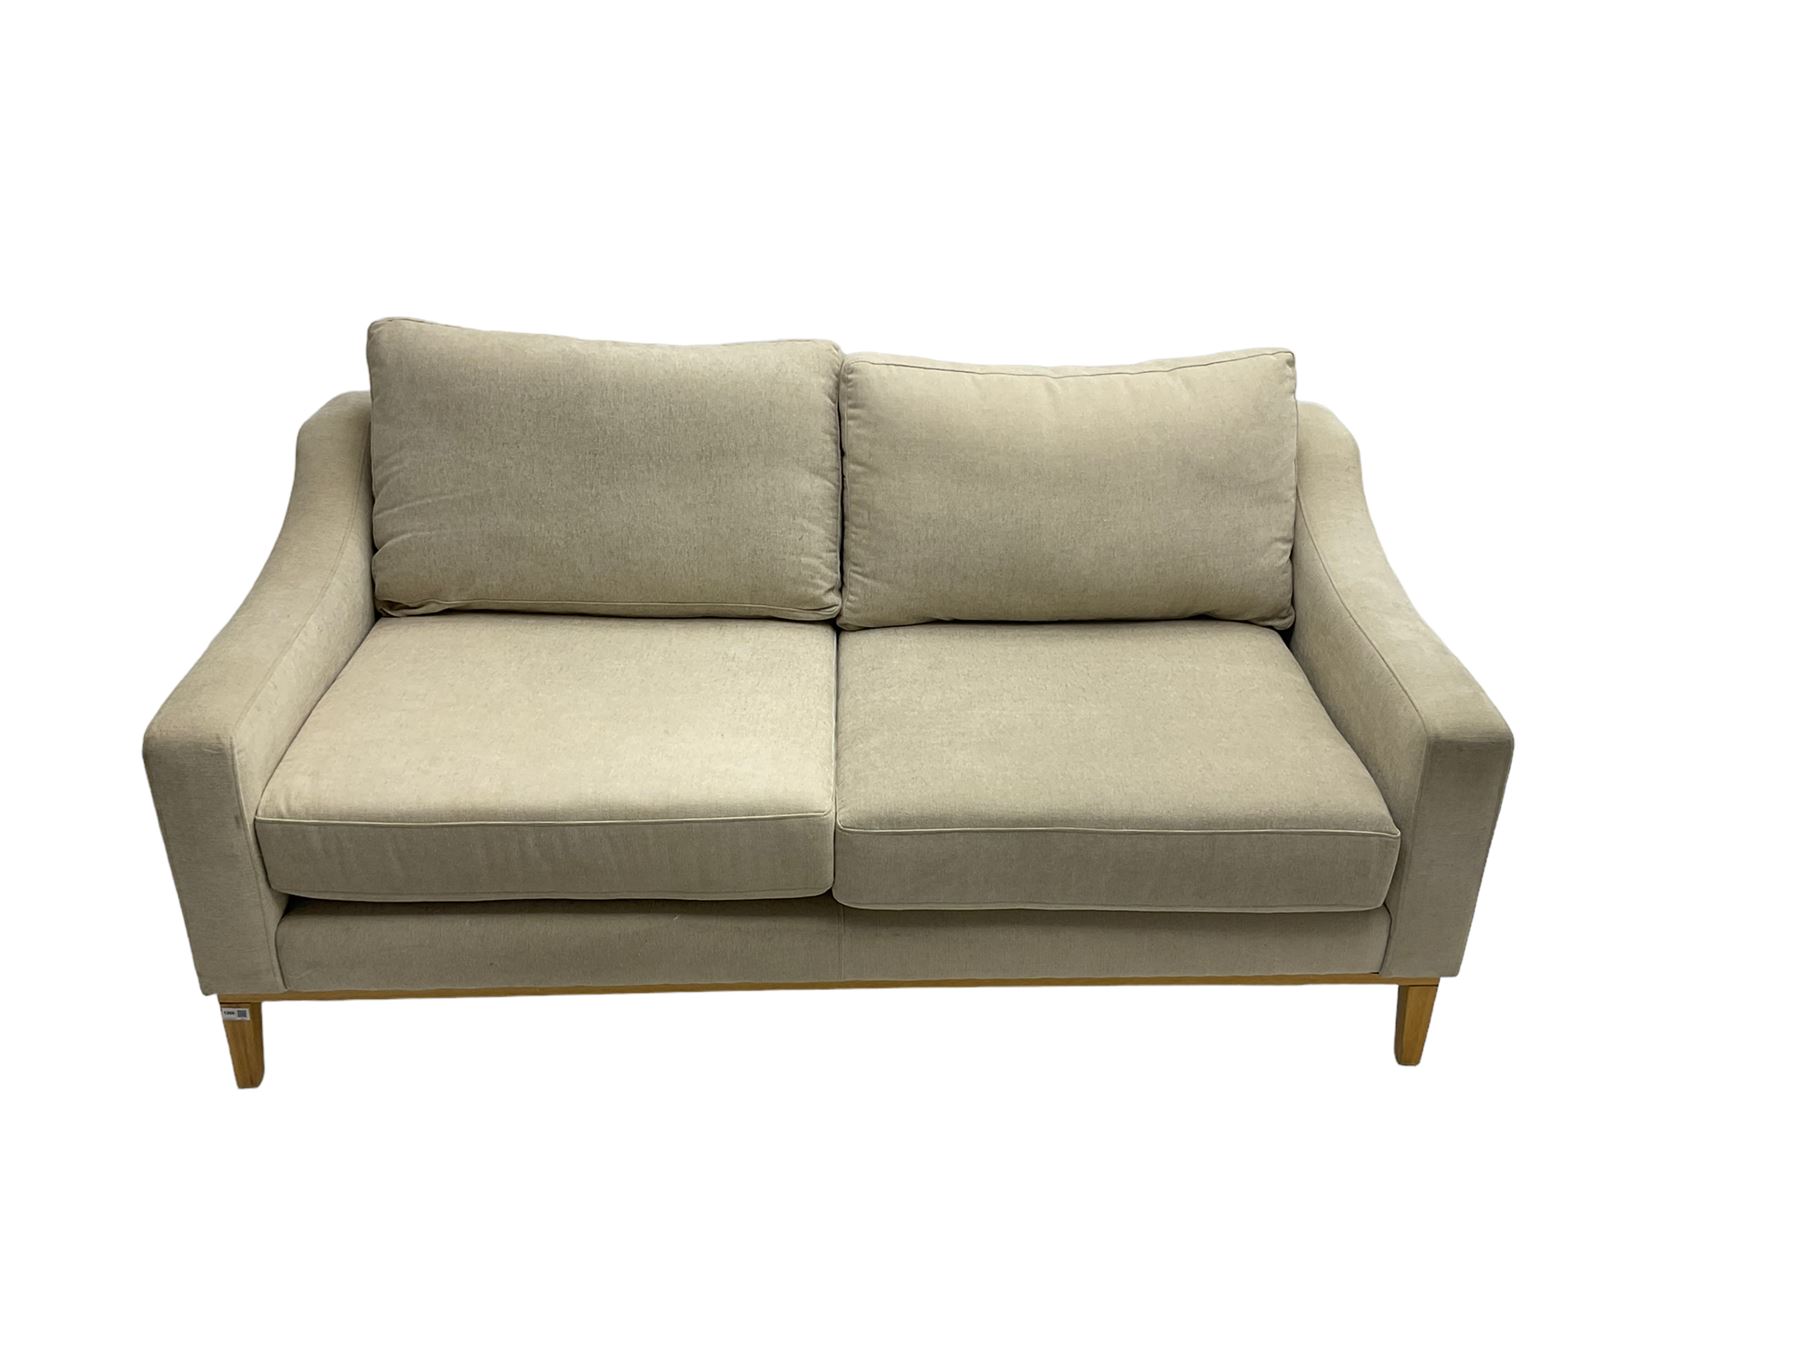 Noble & Jones - three seat sofa - Image 12 of 13